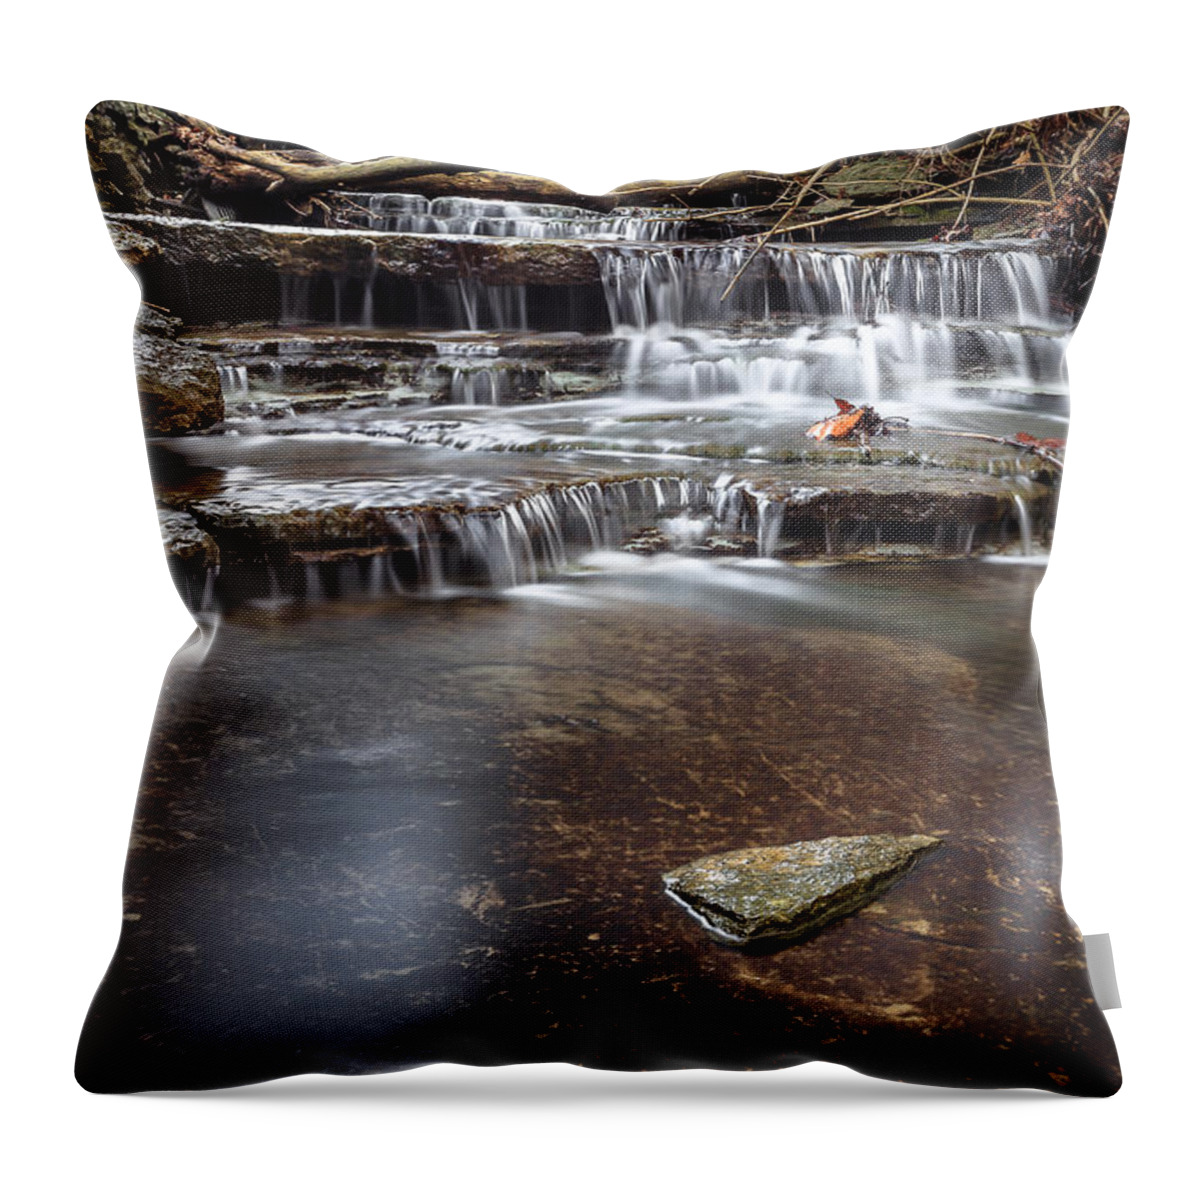 Cincinnati Throw Pillow featuring the photograph Taylor Creek Falls by Keith Allen